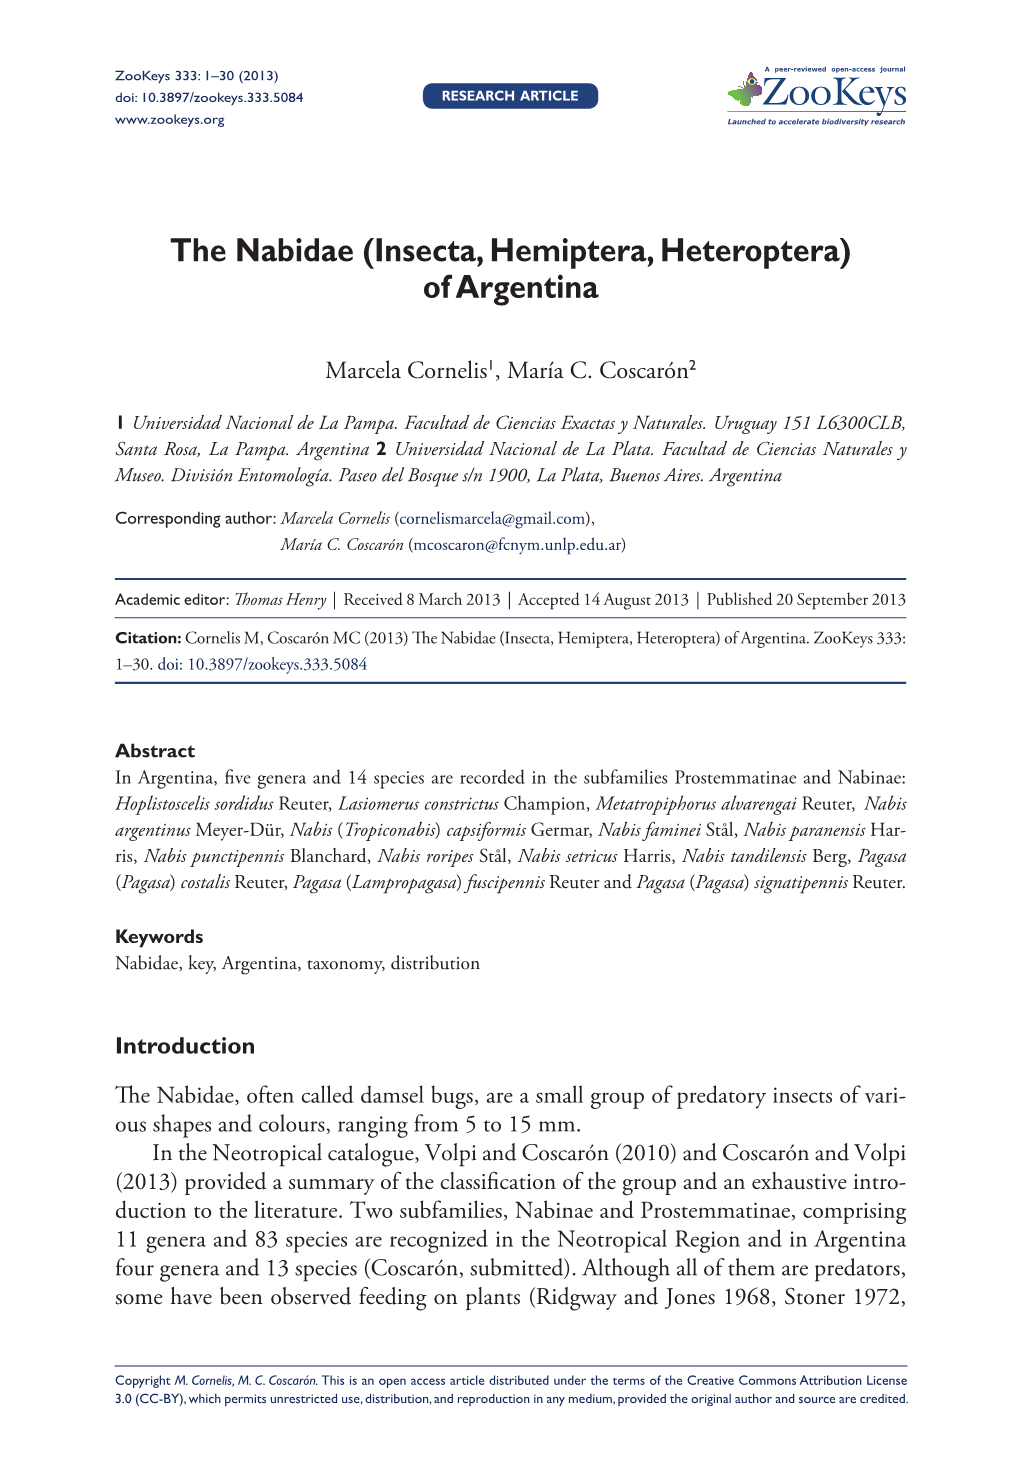 The Nabidae (Insecta, Hemiptera, Heteroptera) of Argentina